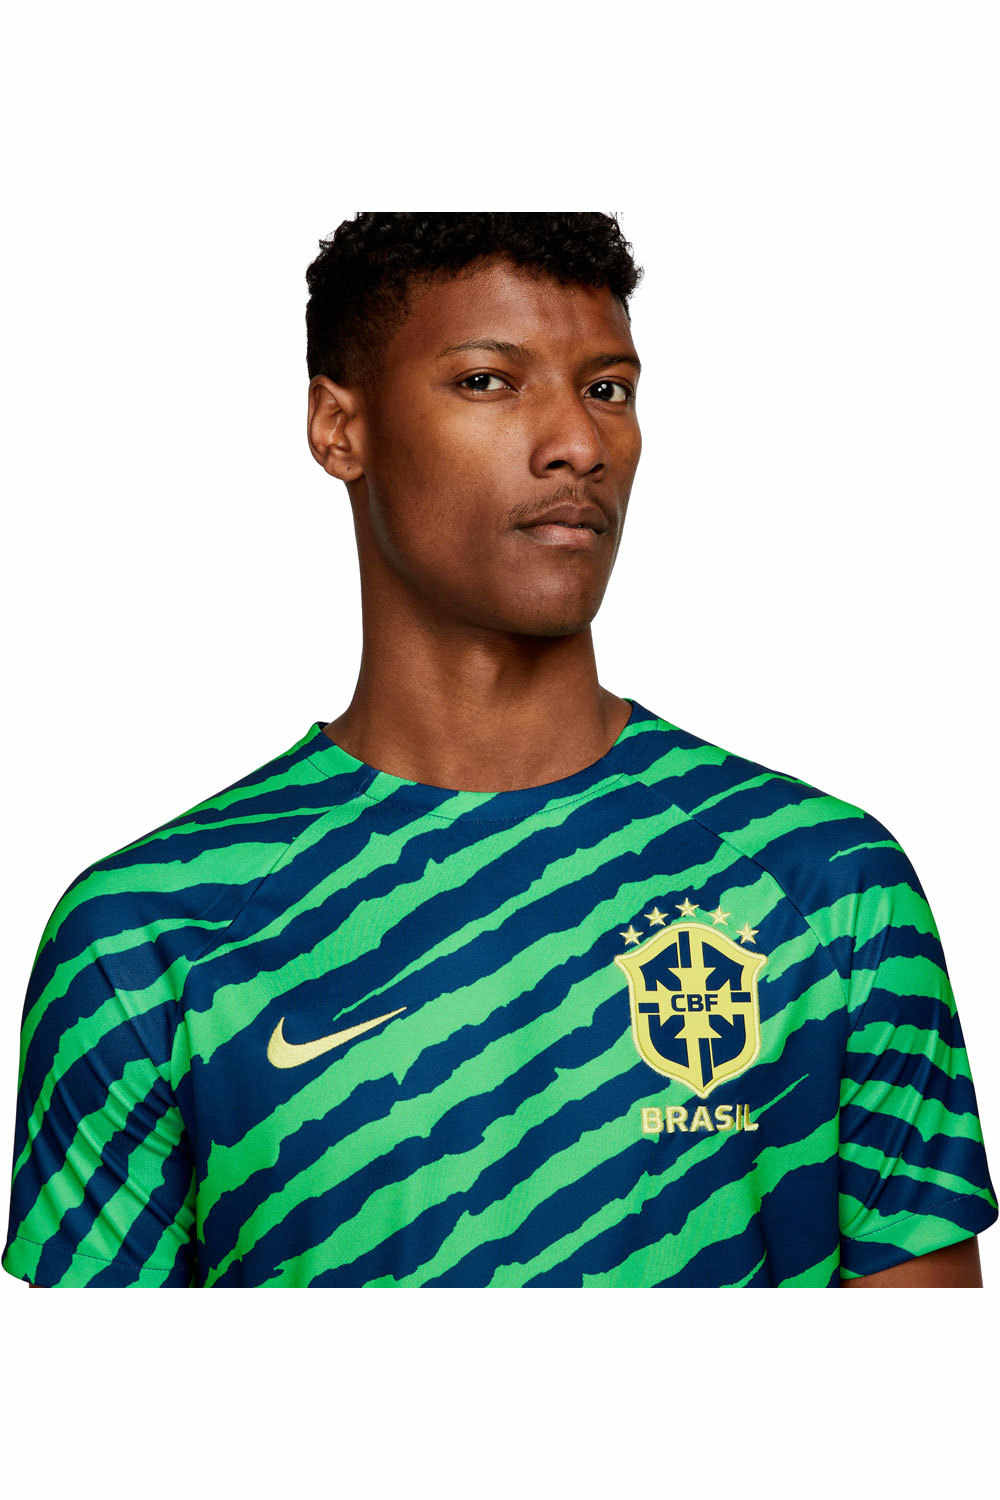 Nike camiseta de fútbol oficiales CAMISETA CALENTAMIENTO BRASIL 2022 vista detalle